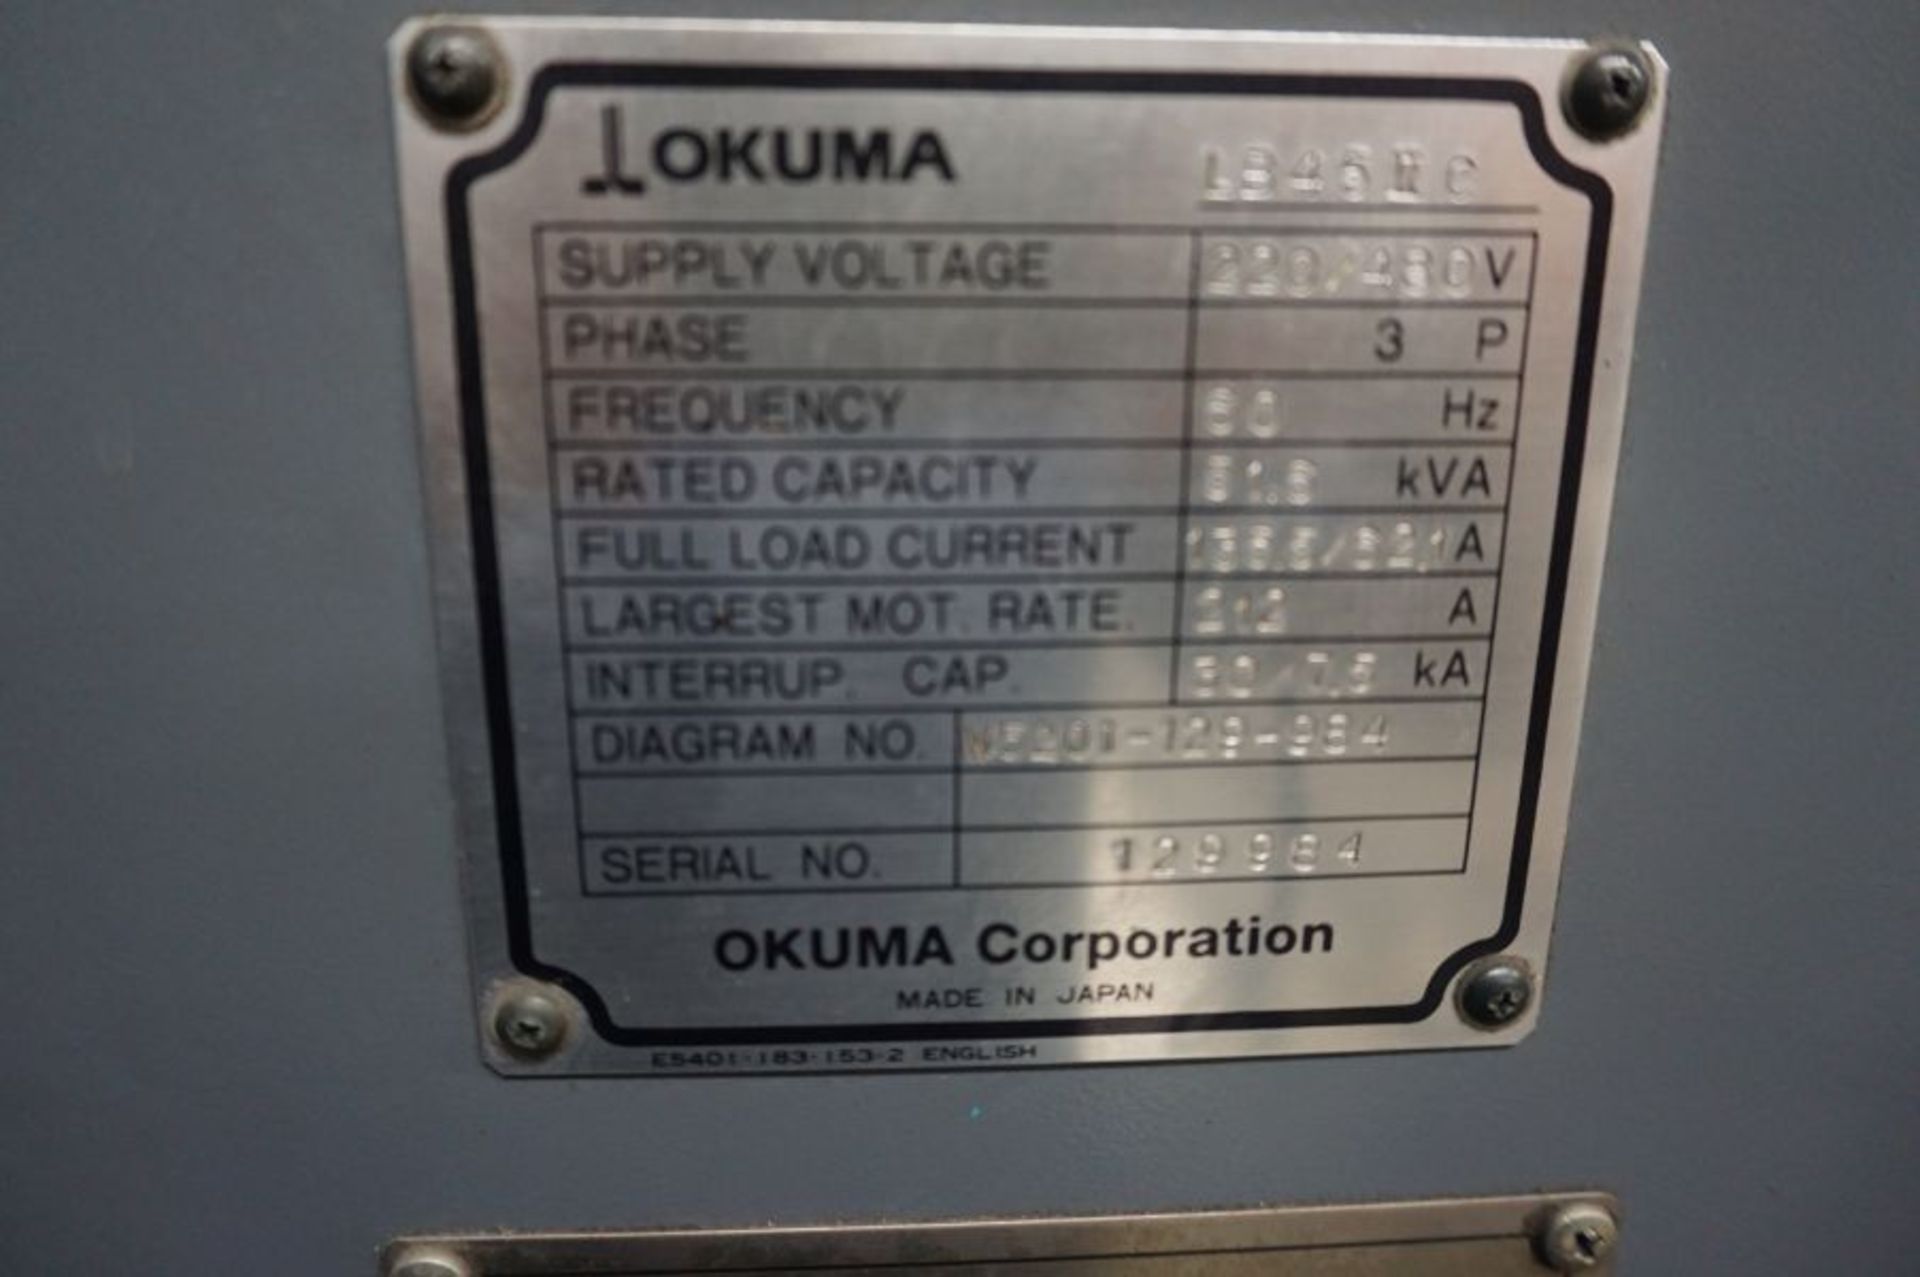 Okuma LB35II-R, OSP-P200LA-R Control, 8" Spindle Bore, Programmable 20" 3 Jaw Chuck, 120" Centers - Image 15 of 15